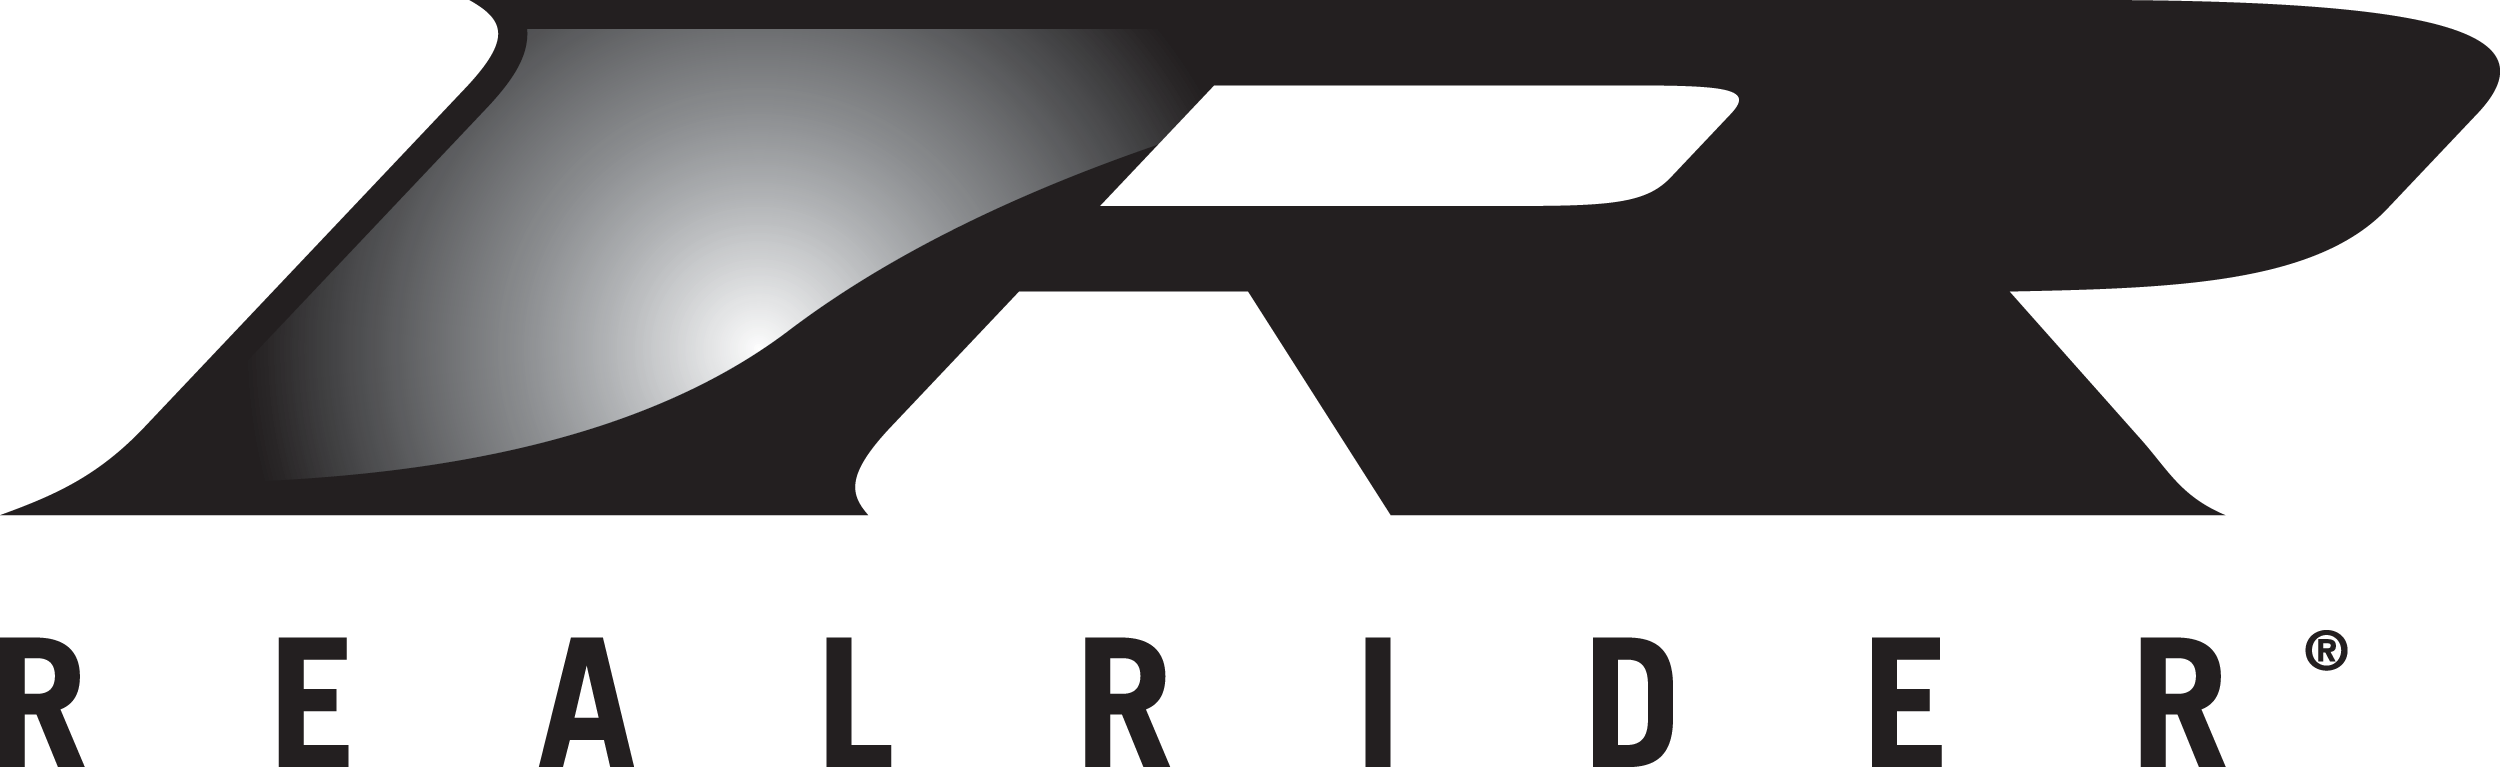 RR-Gradient-Logo